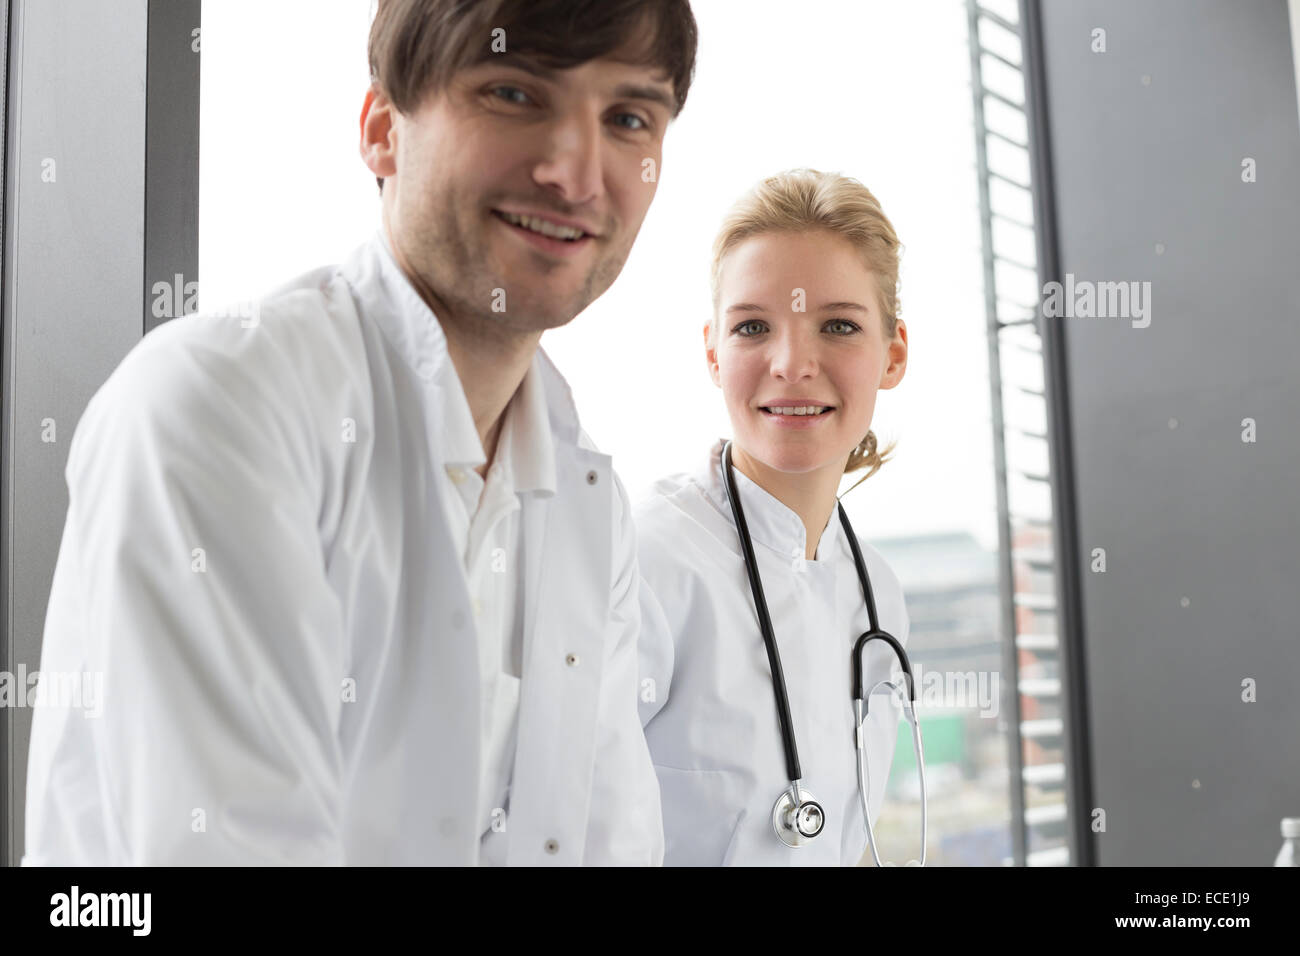 Doctors smiling, portrait Stock Photo